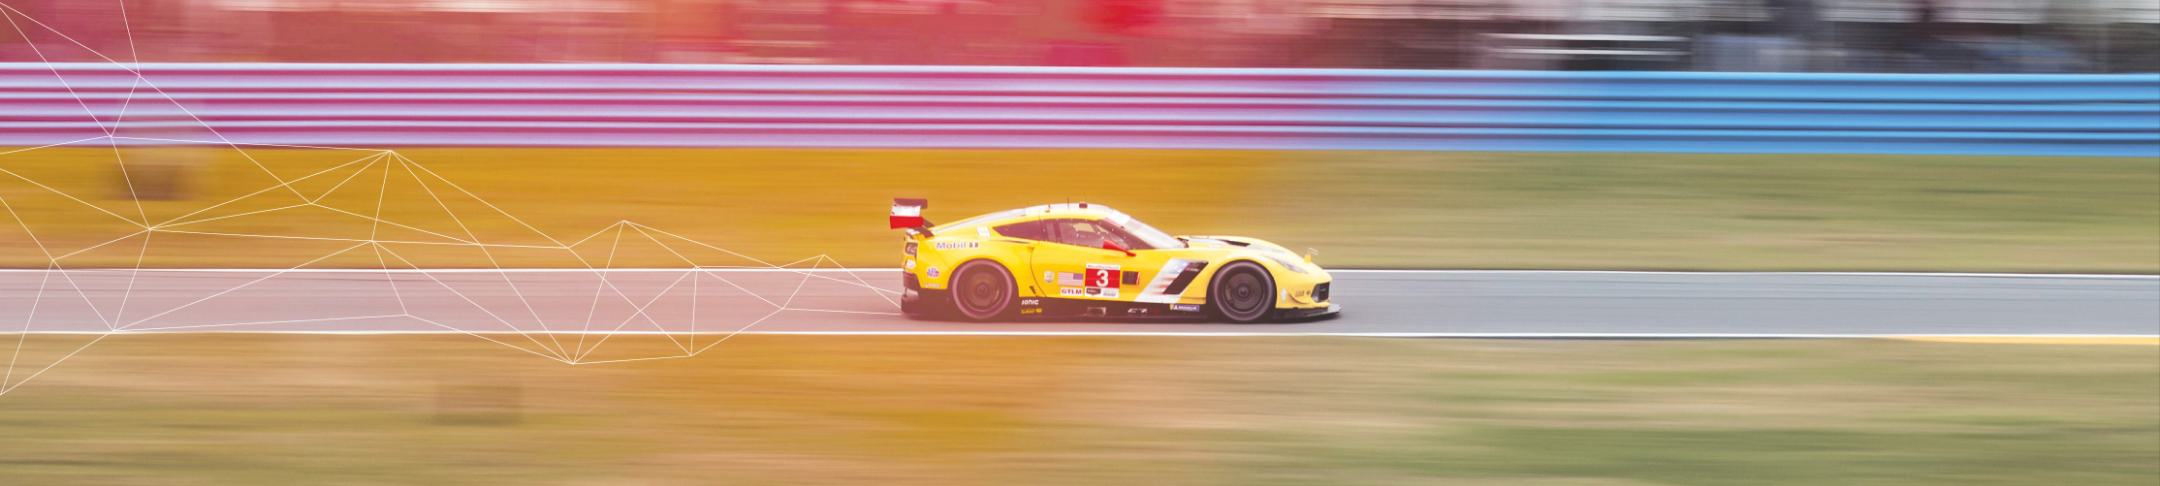 stylized car racing photograph